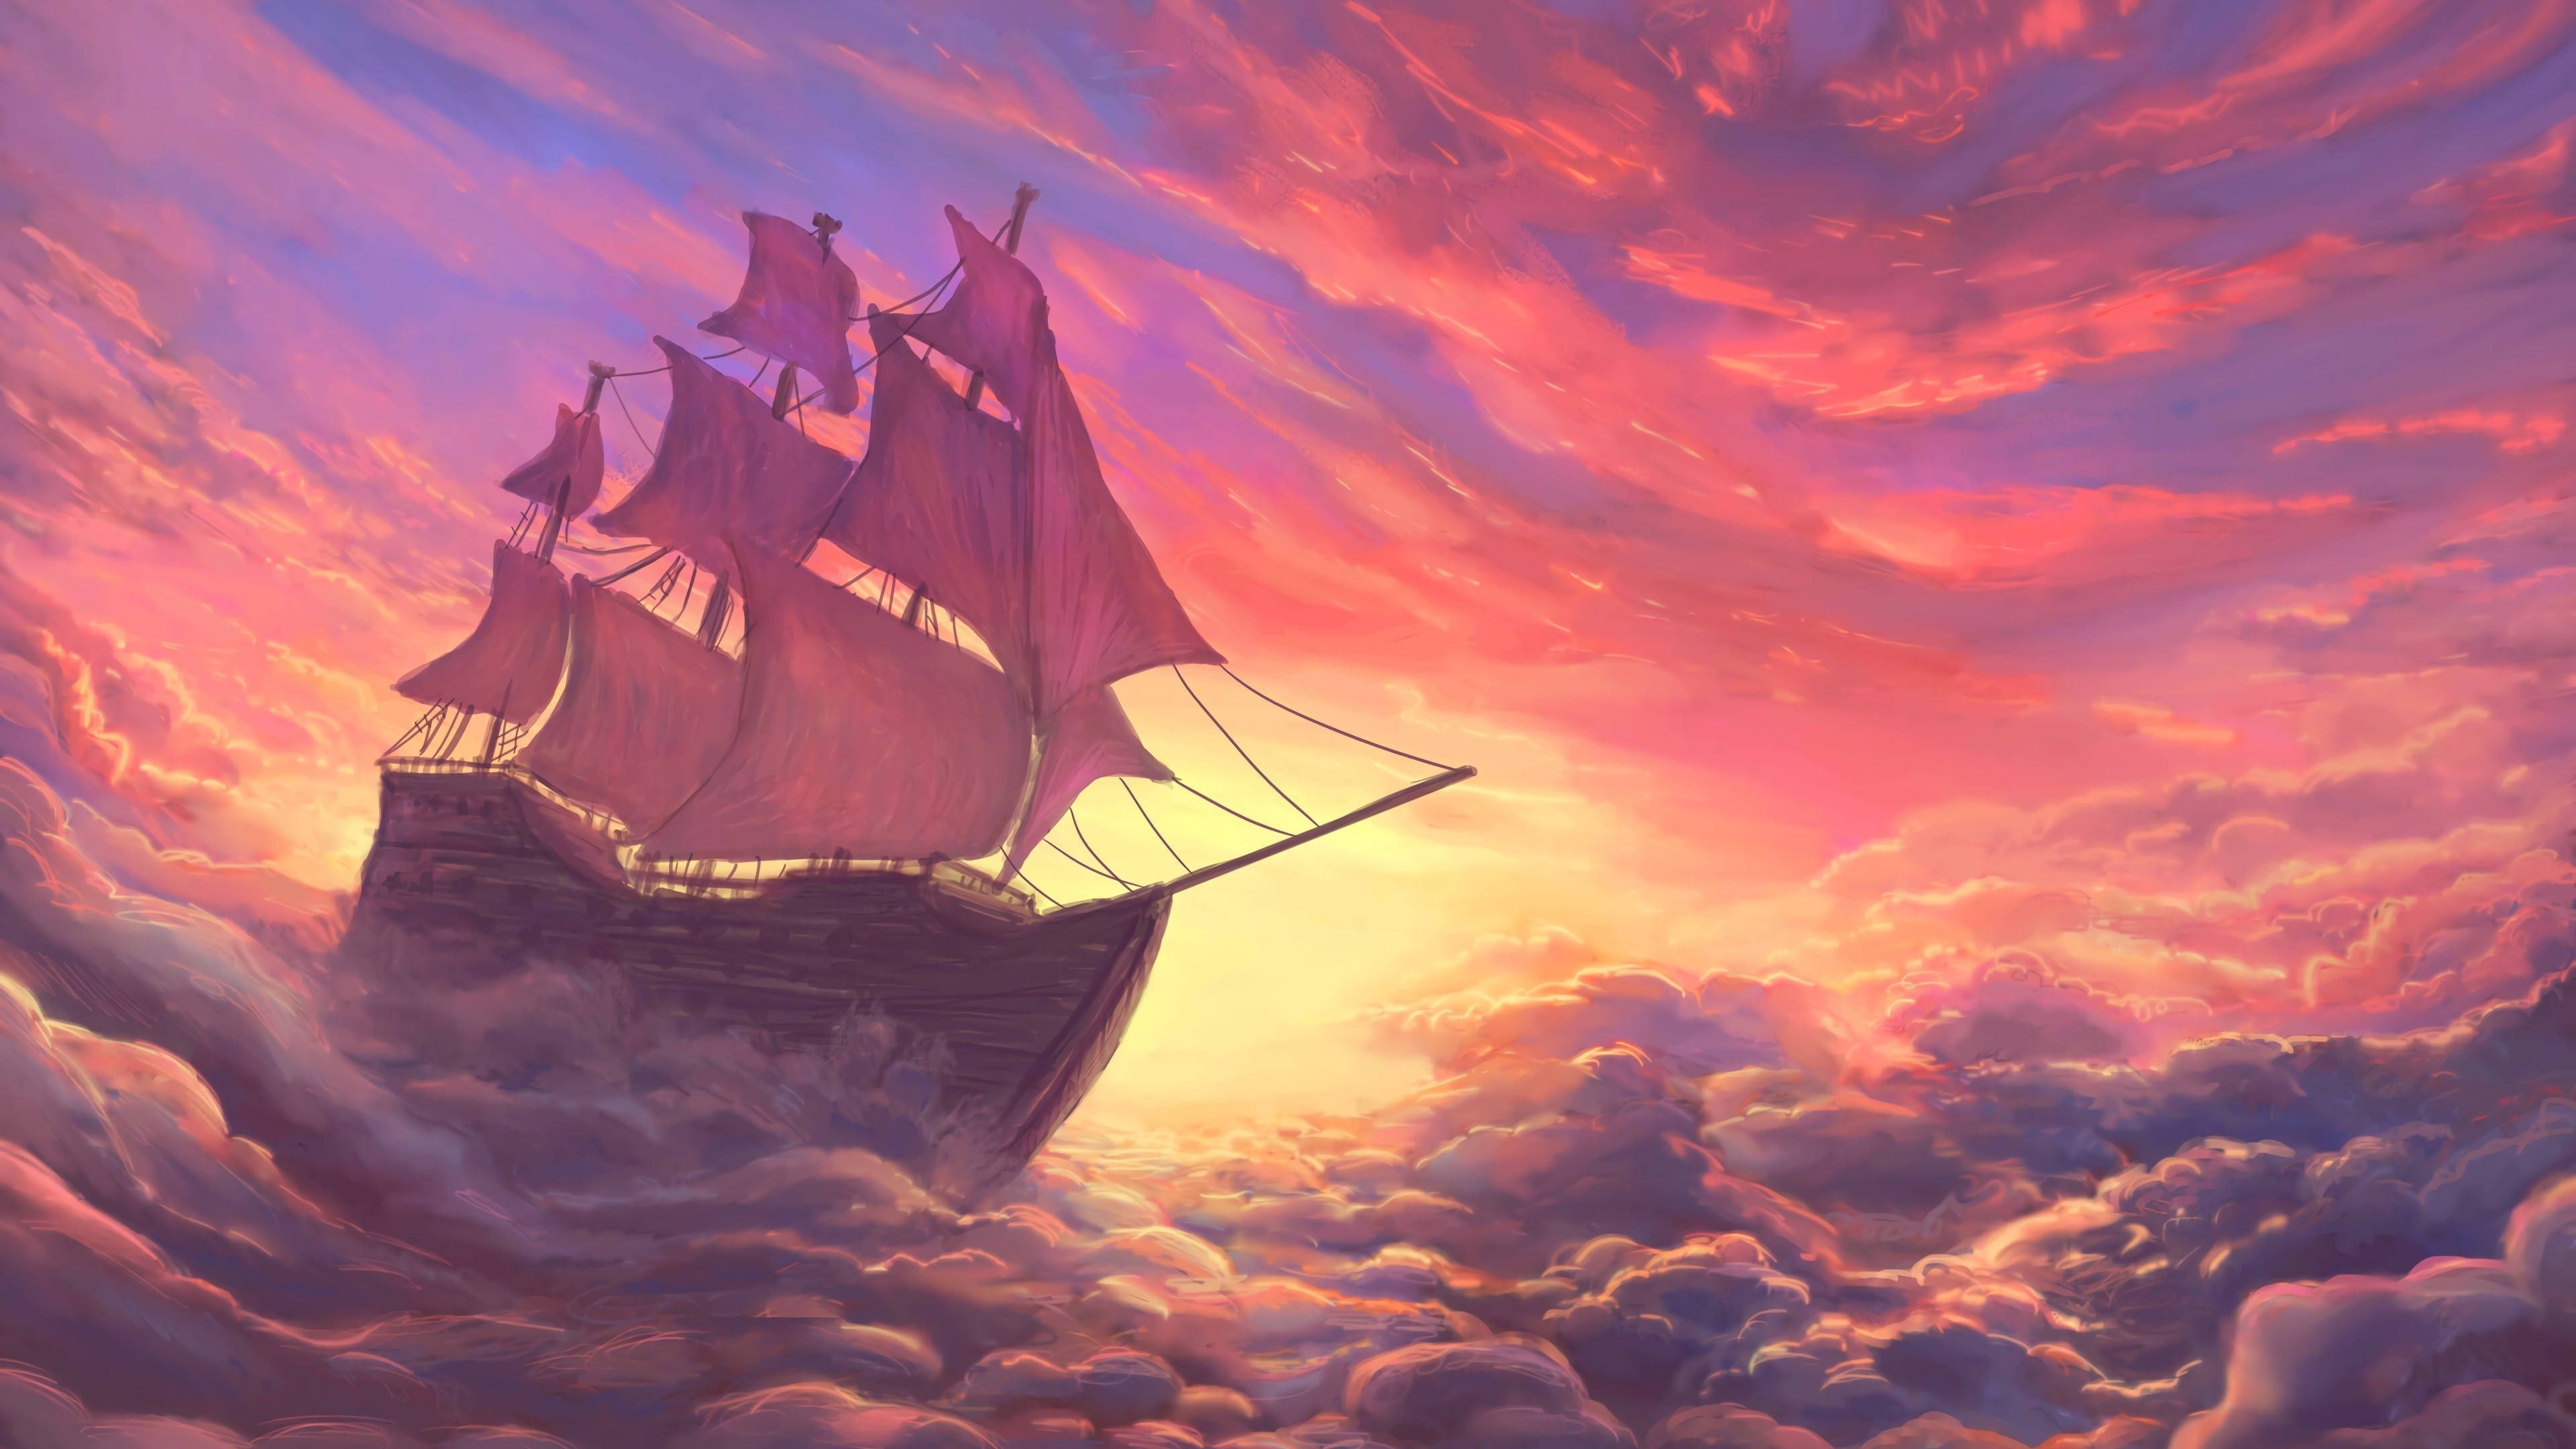 Download Pink Aesthetic Pirate Ship Wallpaper